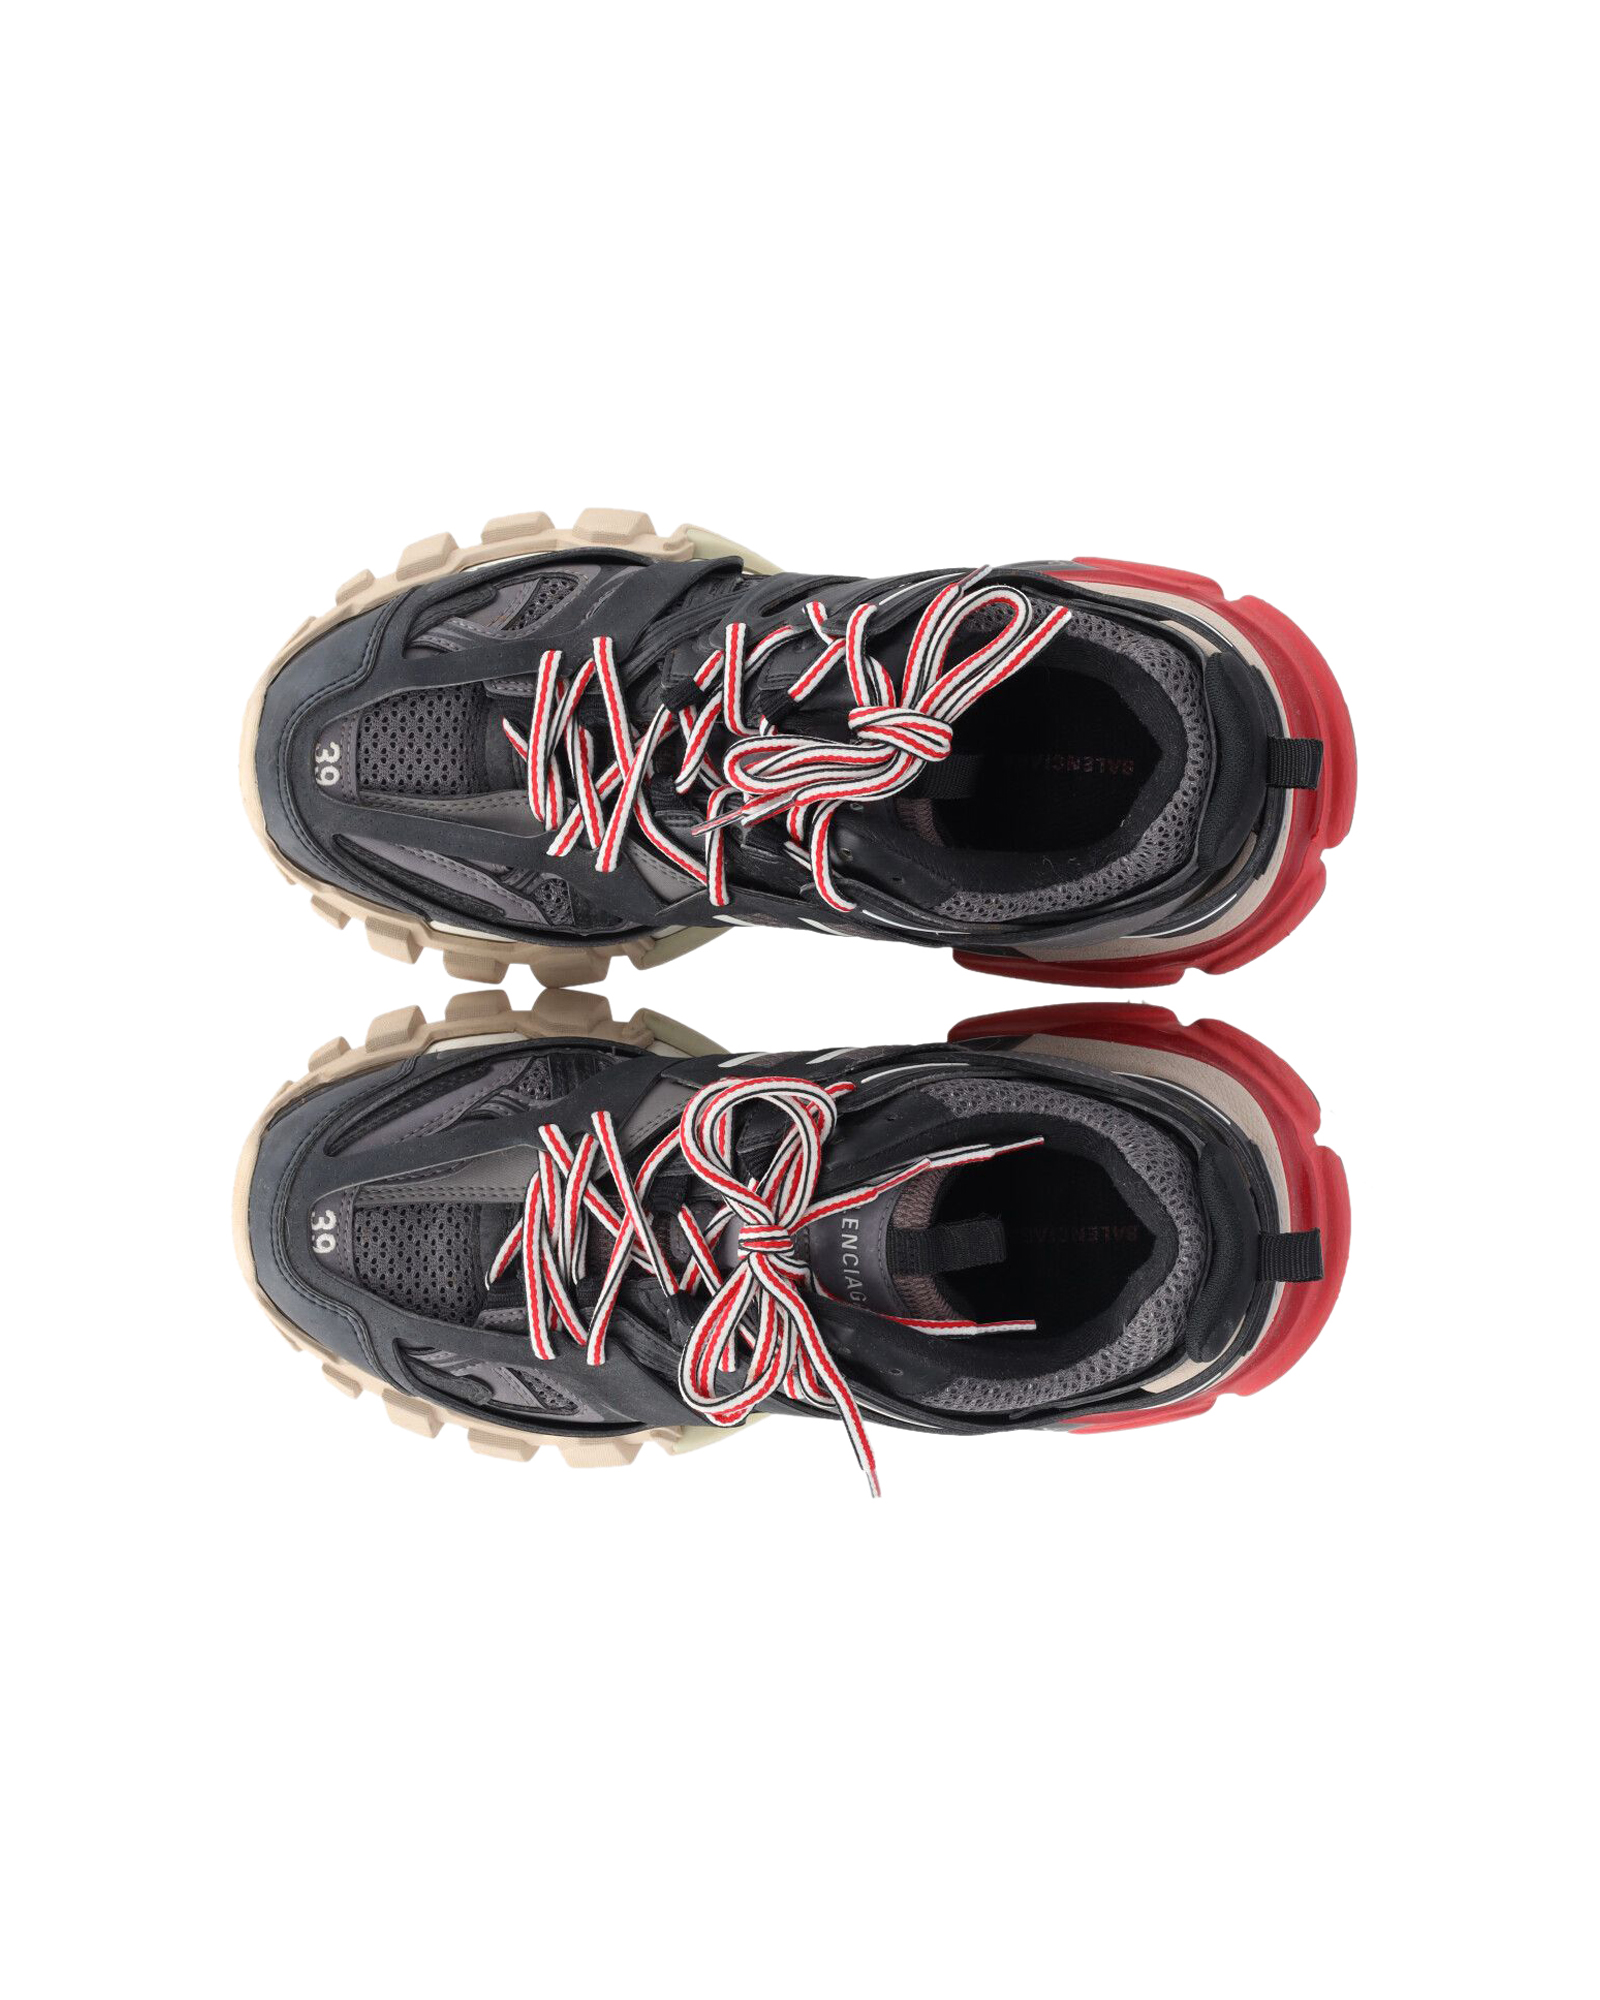 Balenciaga Black/Red Track Sneakers Size EU 39